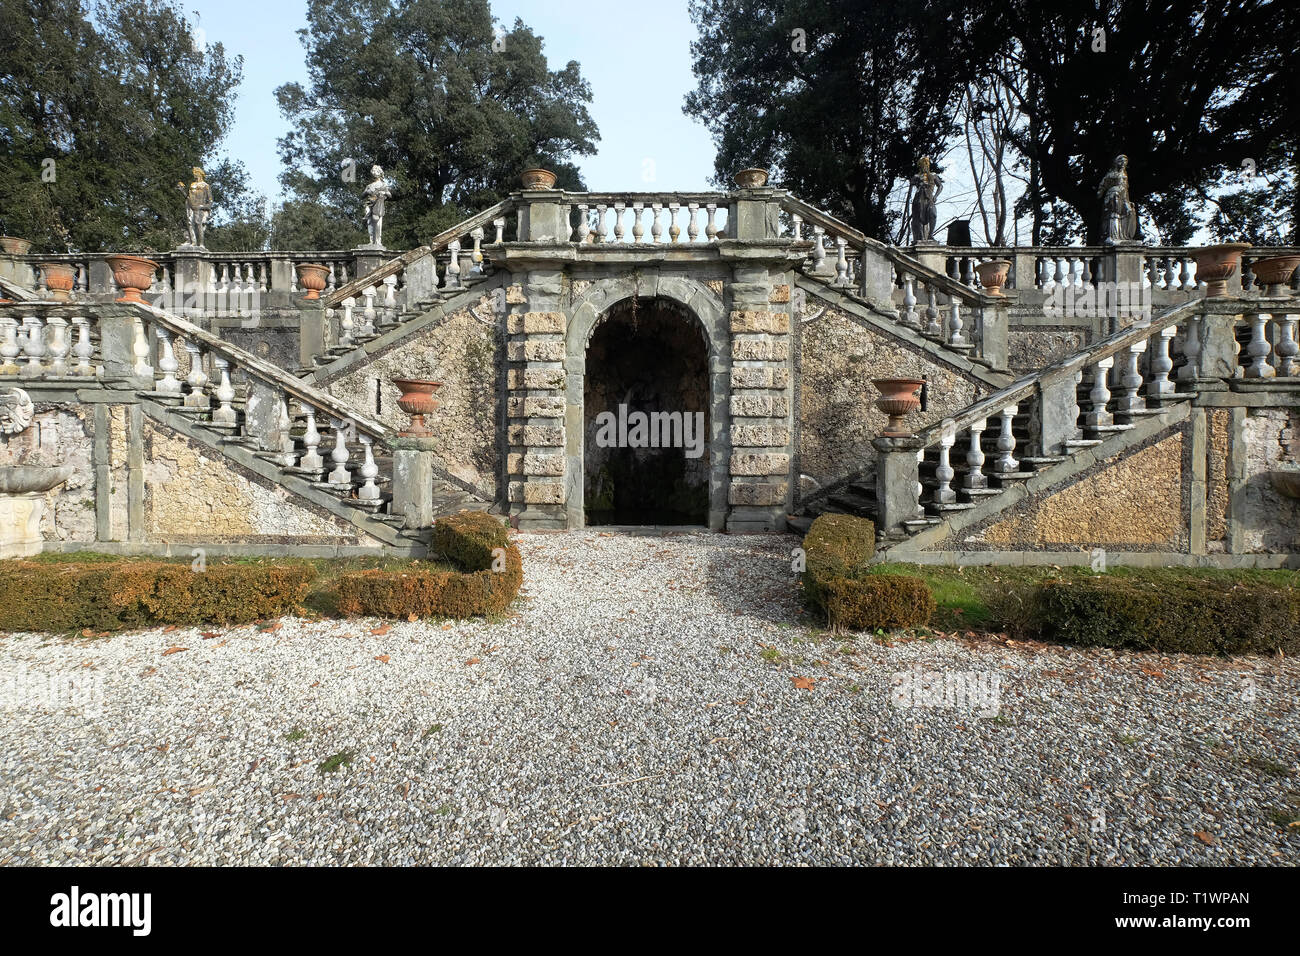 Villa Torrigiani-Camigliano,garden of flora,Lucca,Italy Stock Photo